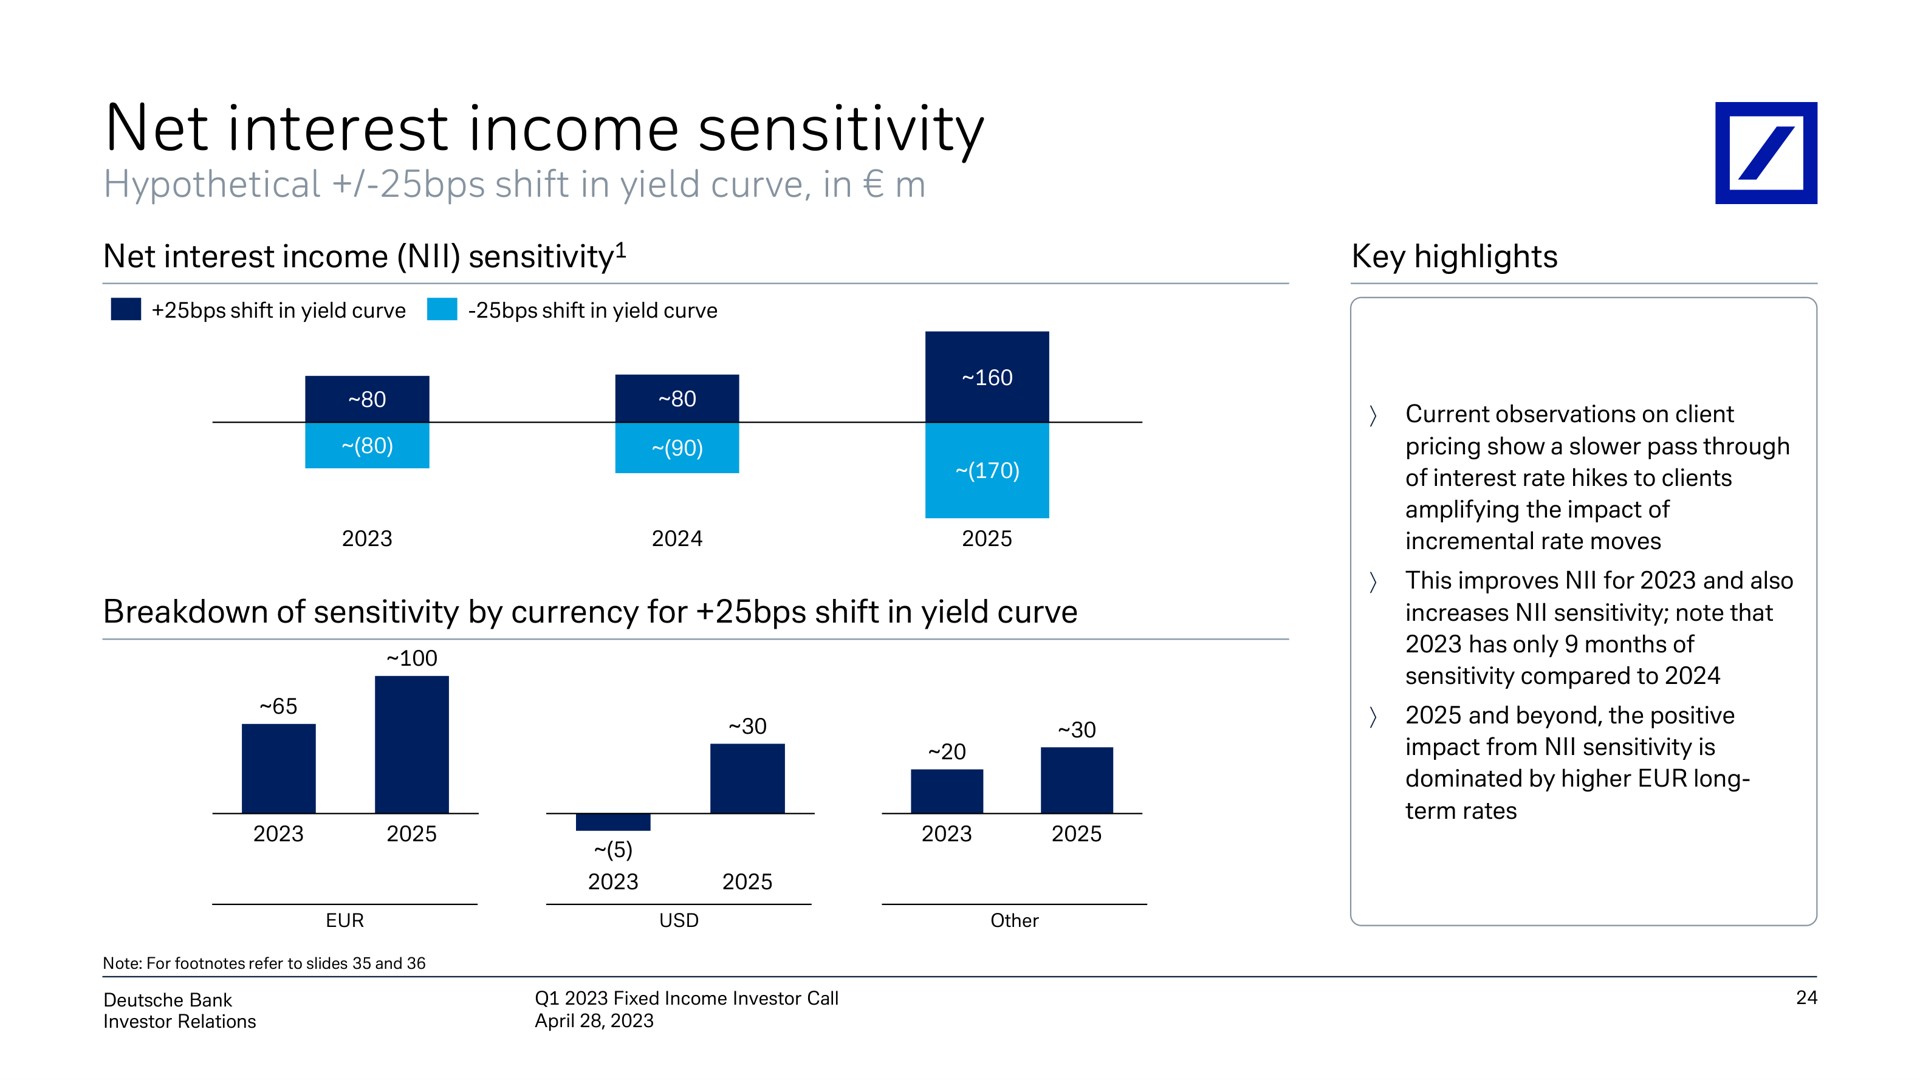 net interest income sensitivity | Deutsche Bank